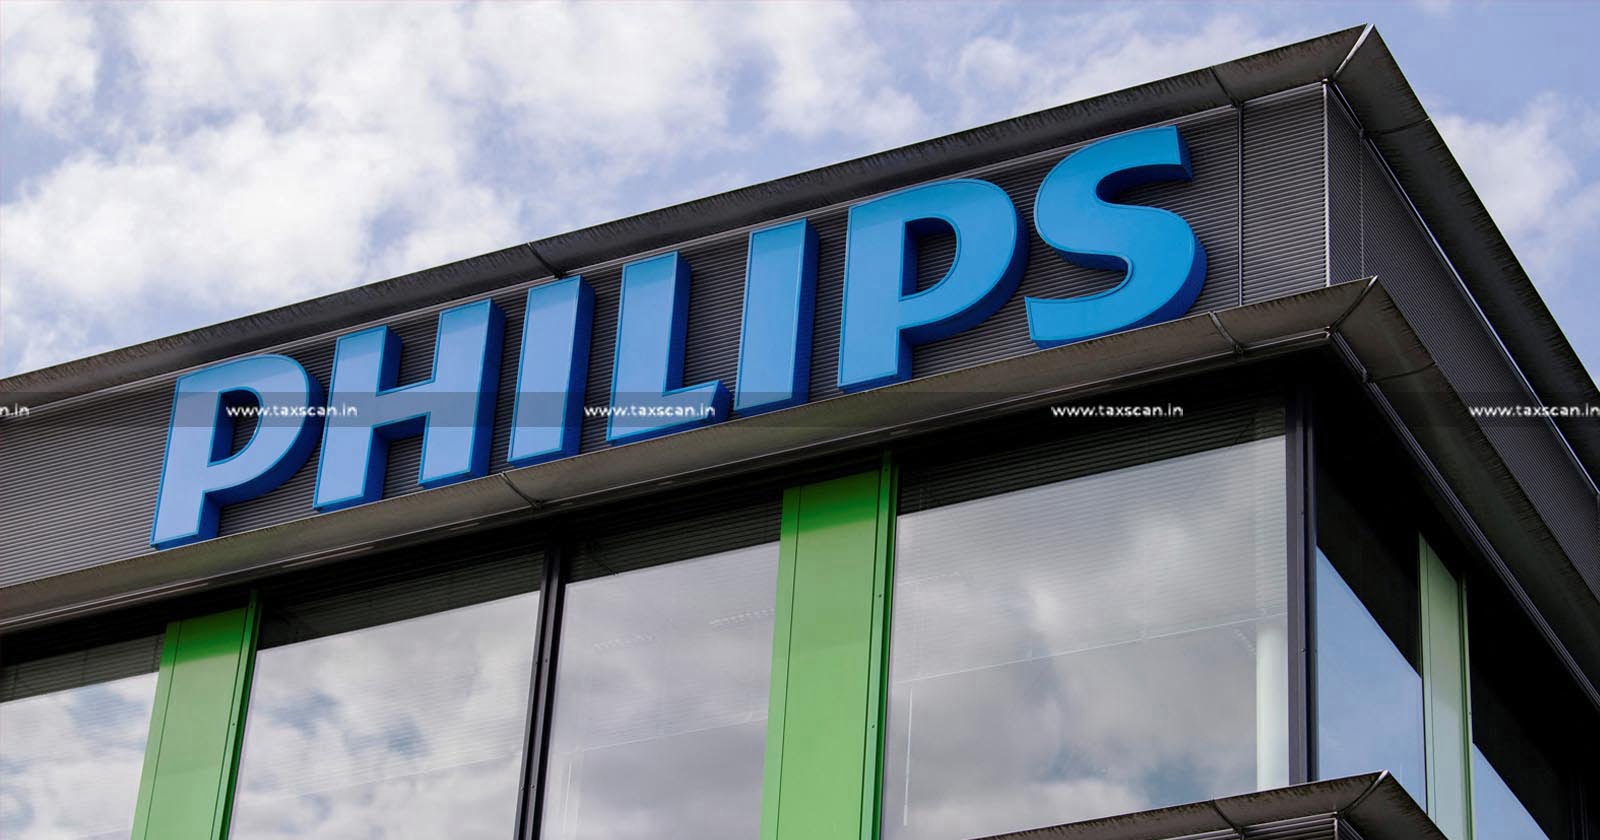 Philips - CA Vacancy In Philips - CMA Vacancy In Philips - Philips Careers - Philips Hiring - CA Jobs In Philips - Taxscan